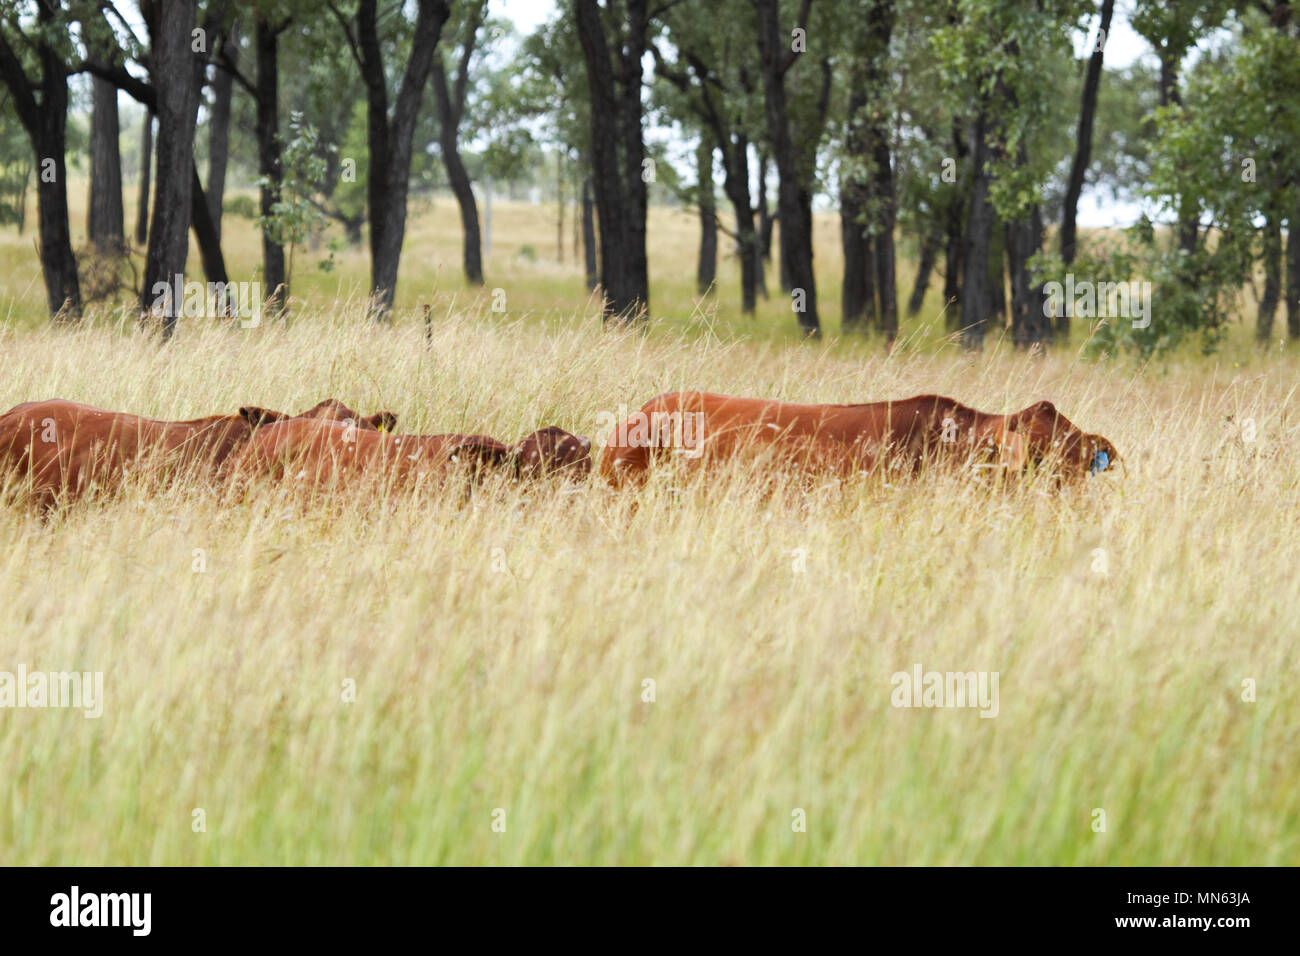 Cattle walking through tall grass. Stock Photo